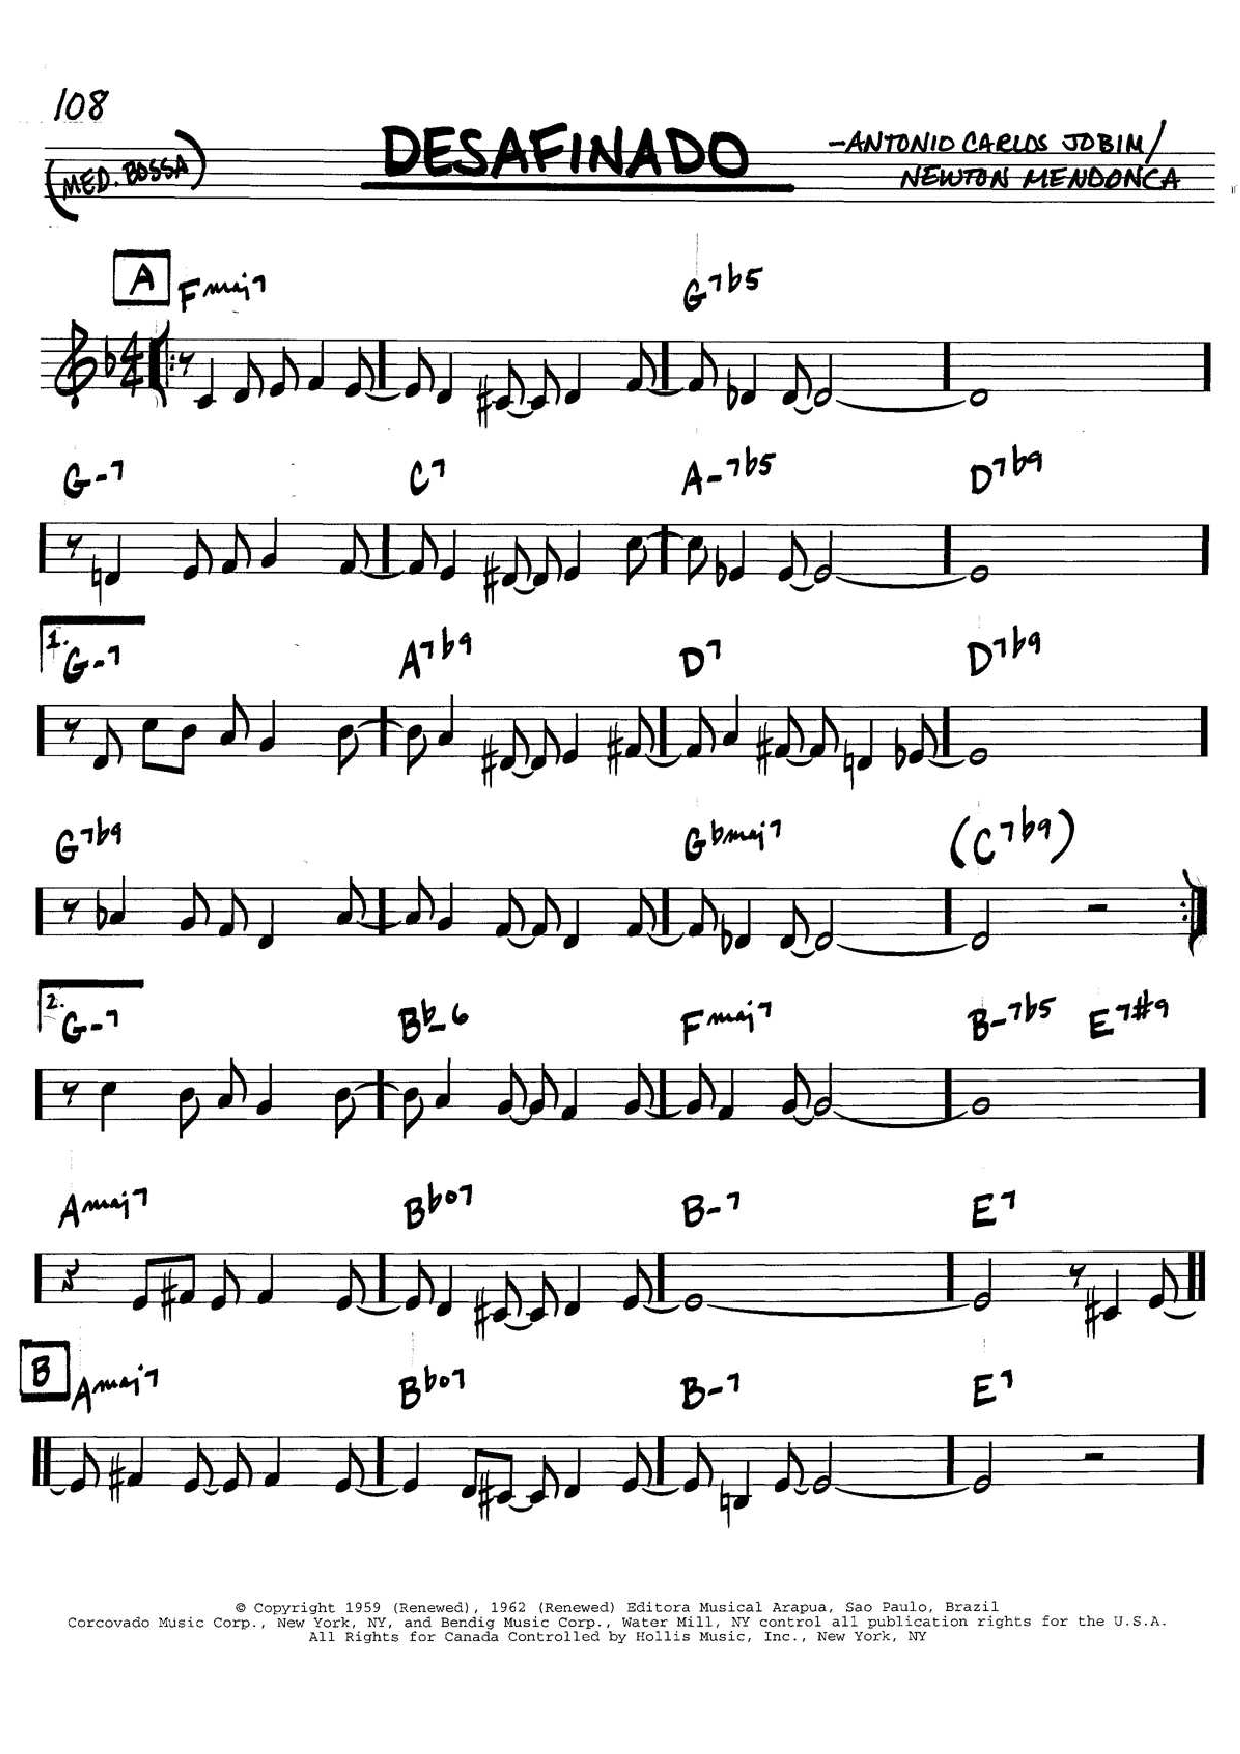 Antonio Carlos Jobim Desafinado Sheet Music Notes & Chords for Piano - Download or Print PDF